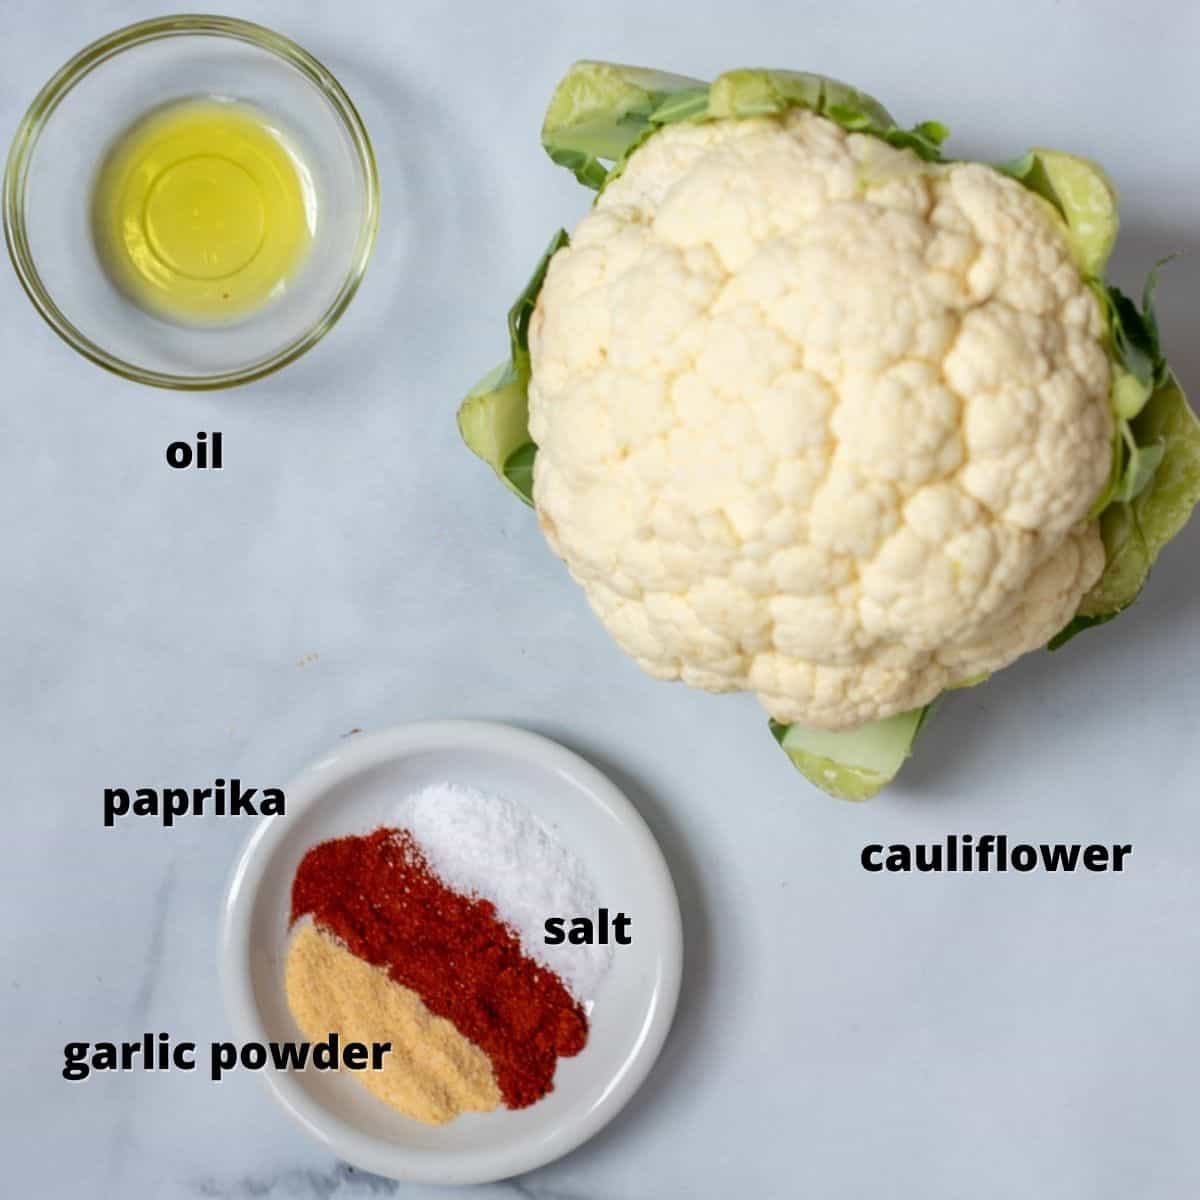 Cauliflower, seasonings, and oil on counter. 